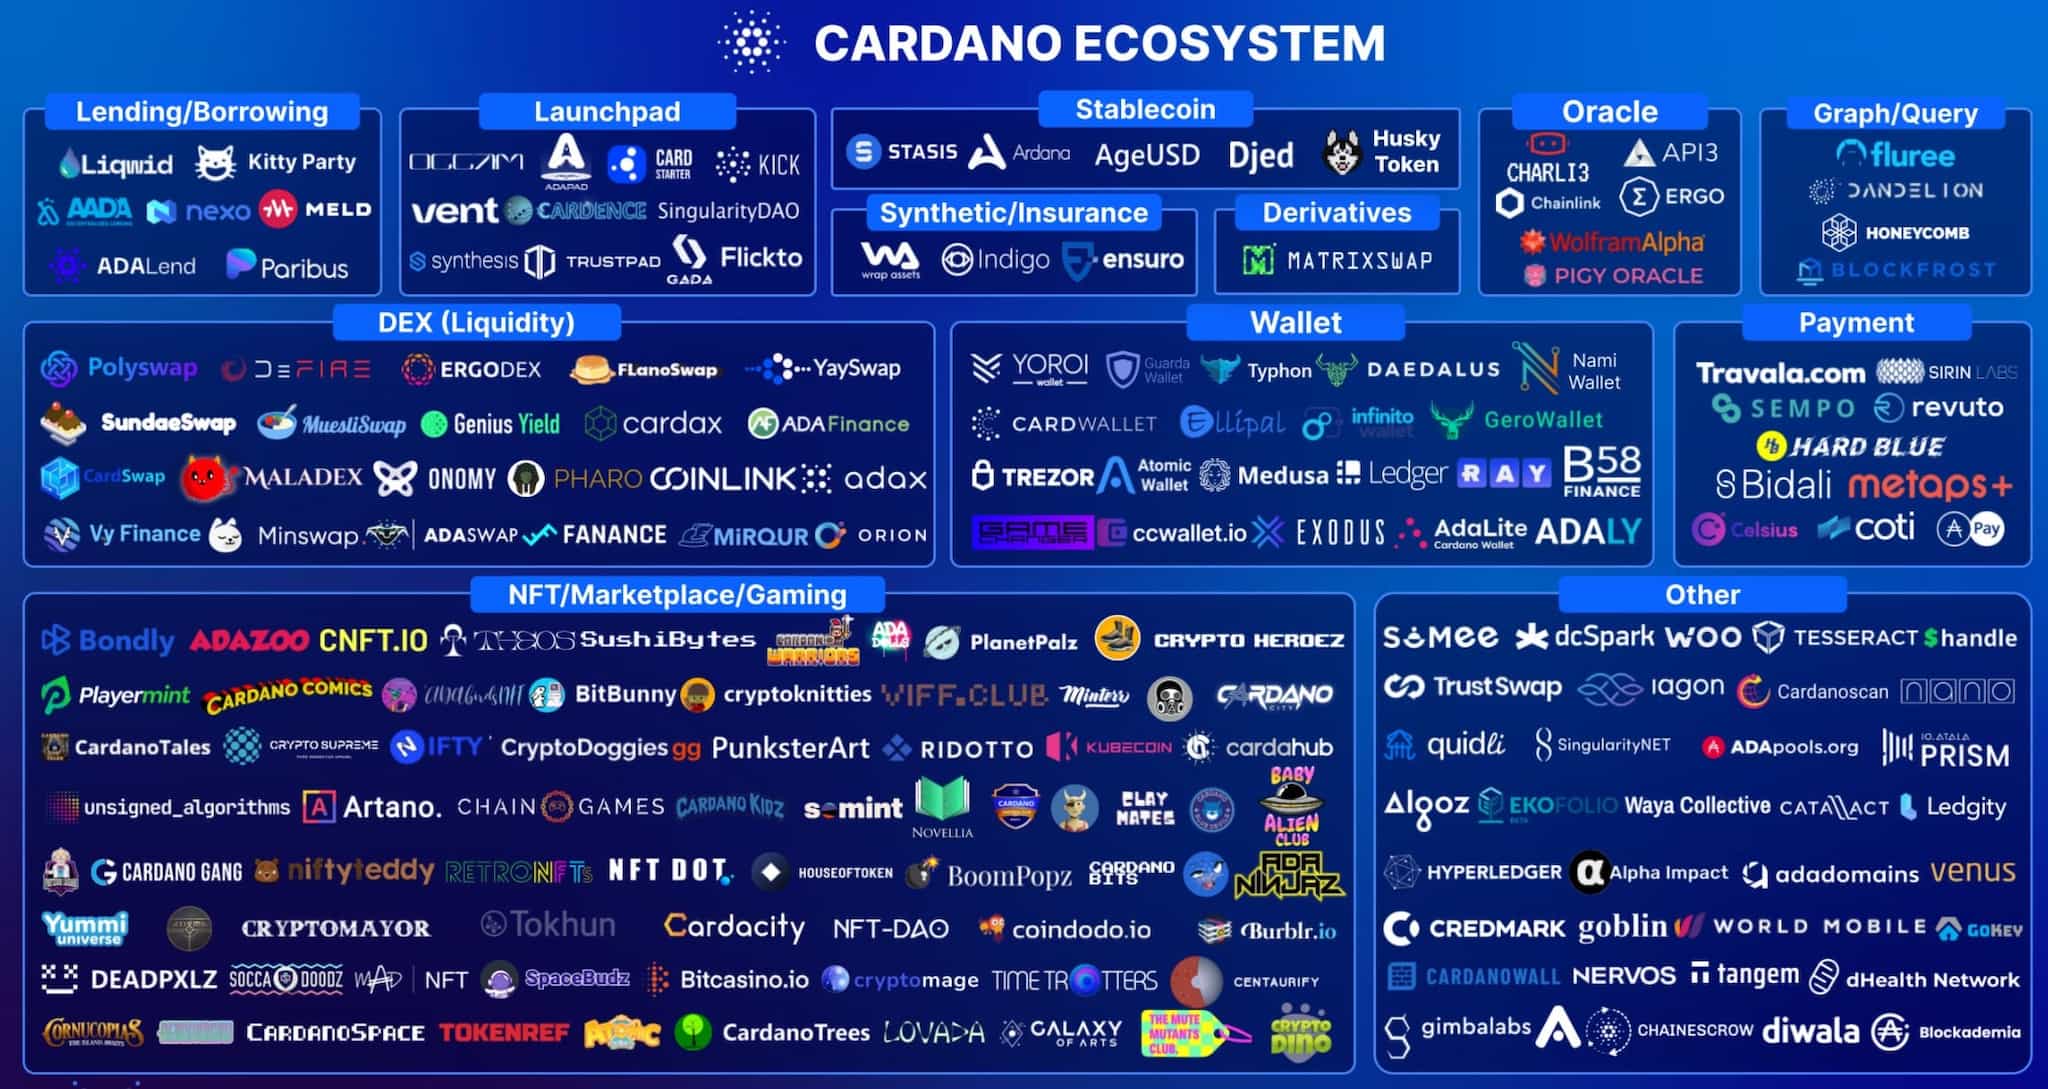 Cardano Ecosystem